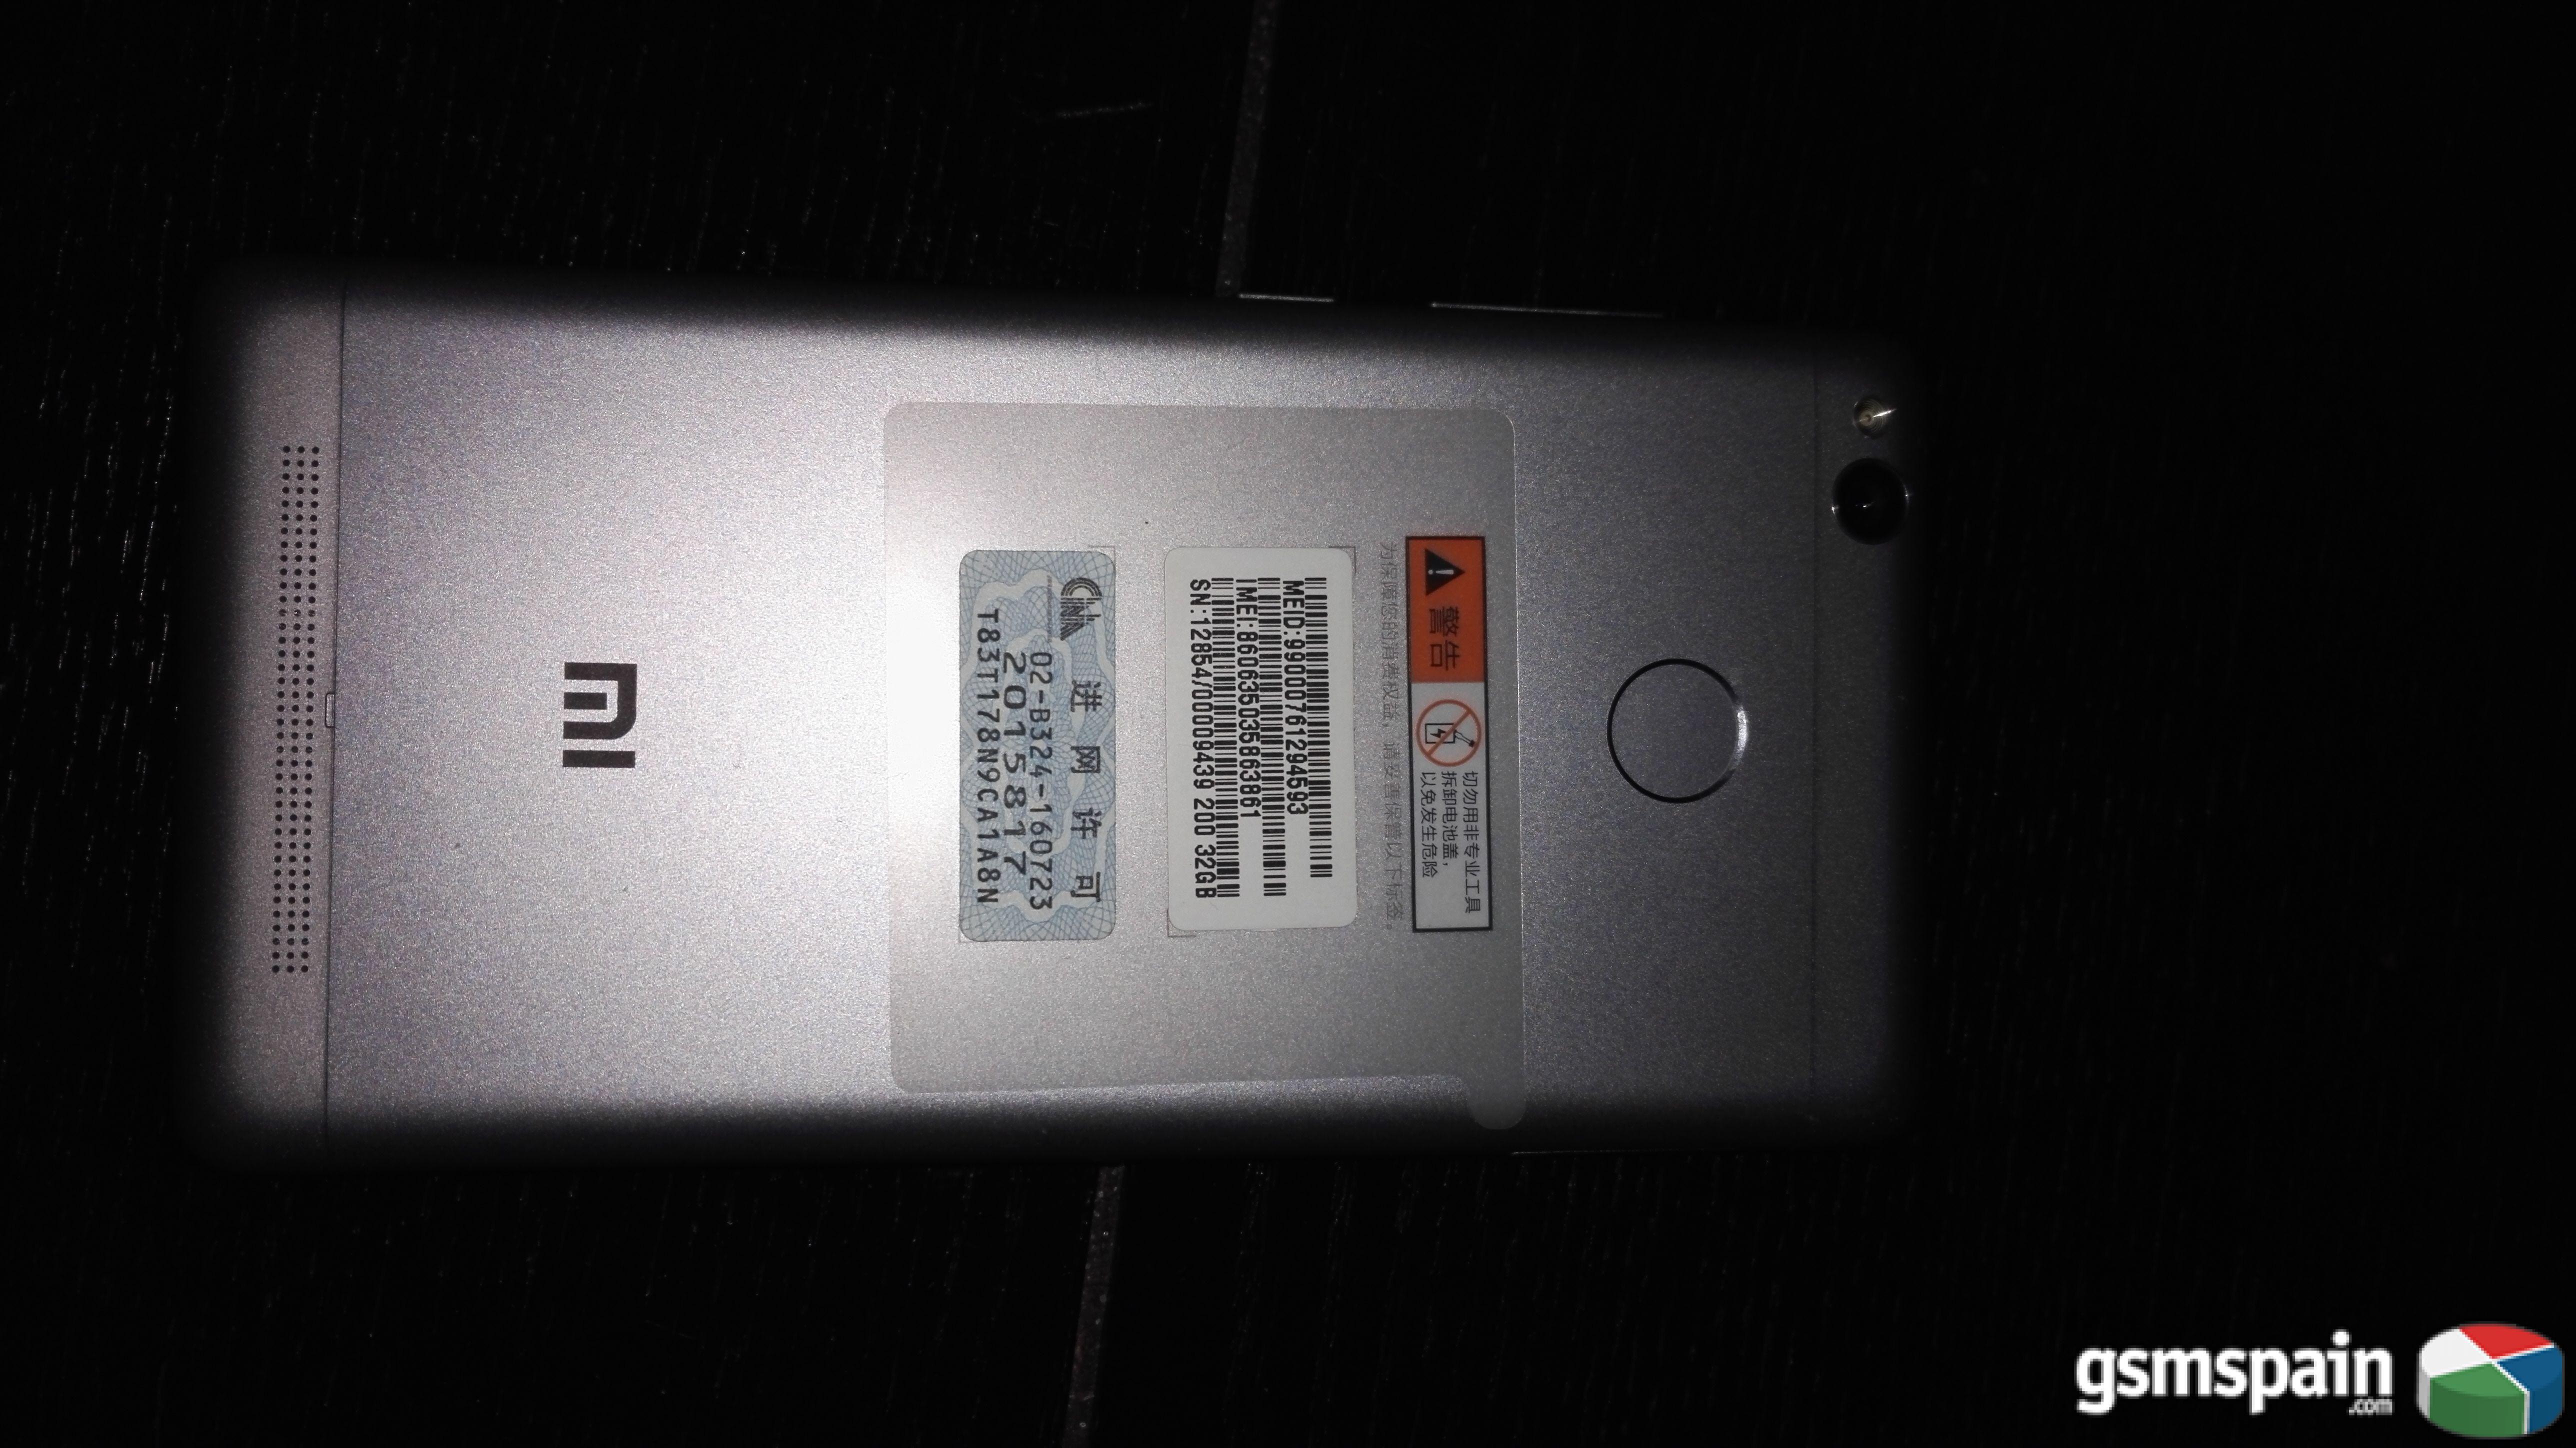 [VENDO] Xiaomi Redmi 3 PRO huella digital 3 gb RAM